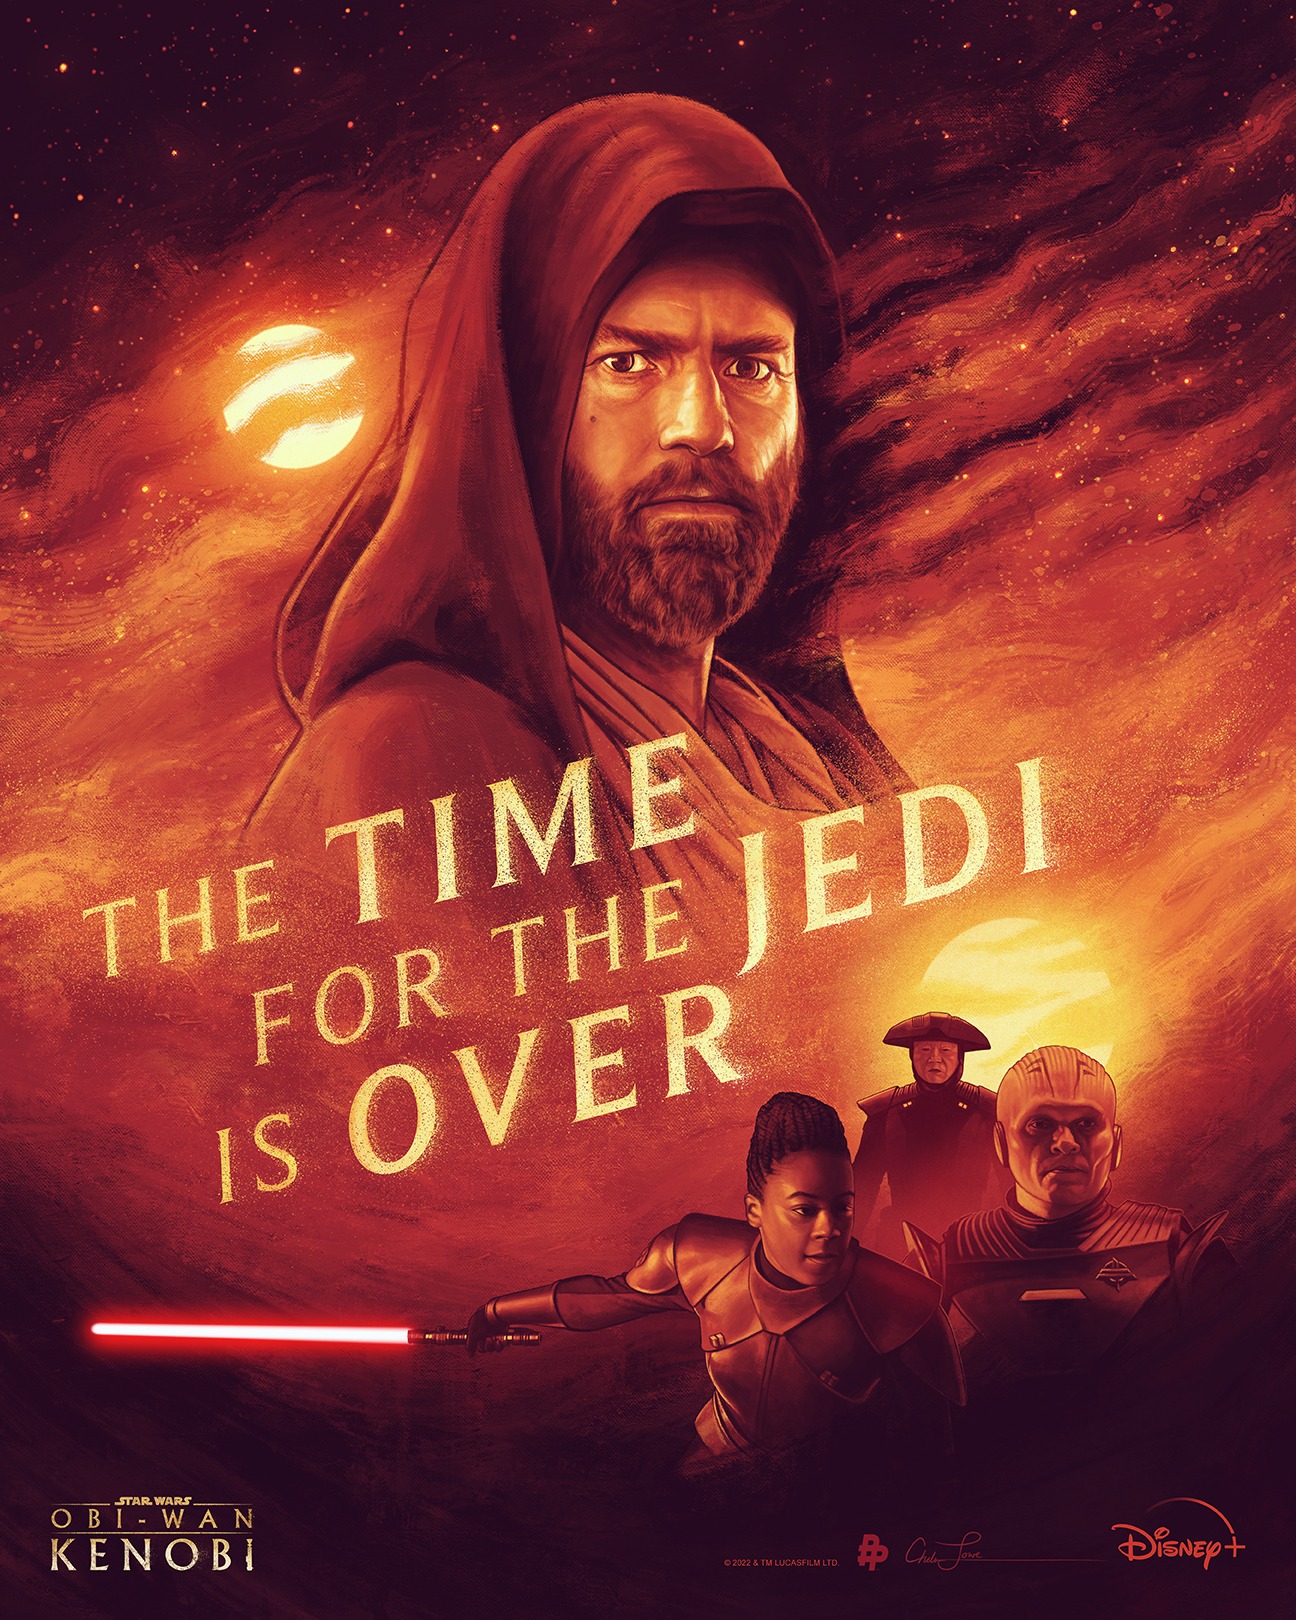 Obi Wan Kenobi the time of the jedi is over